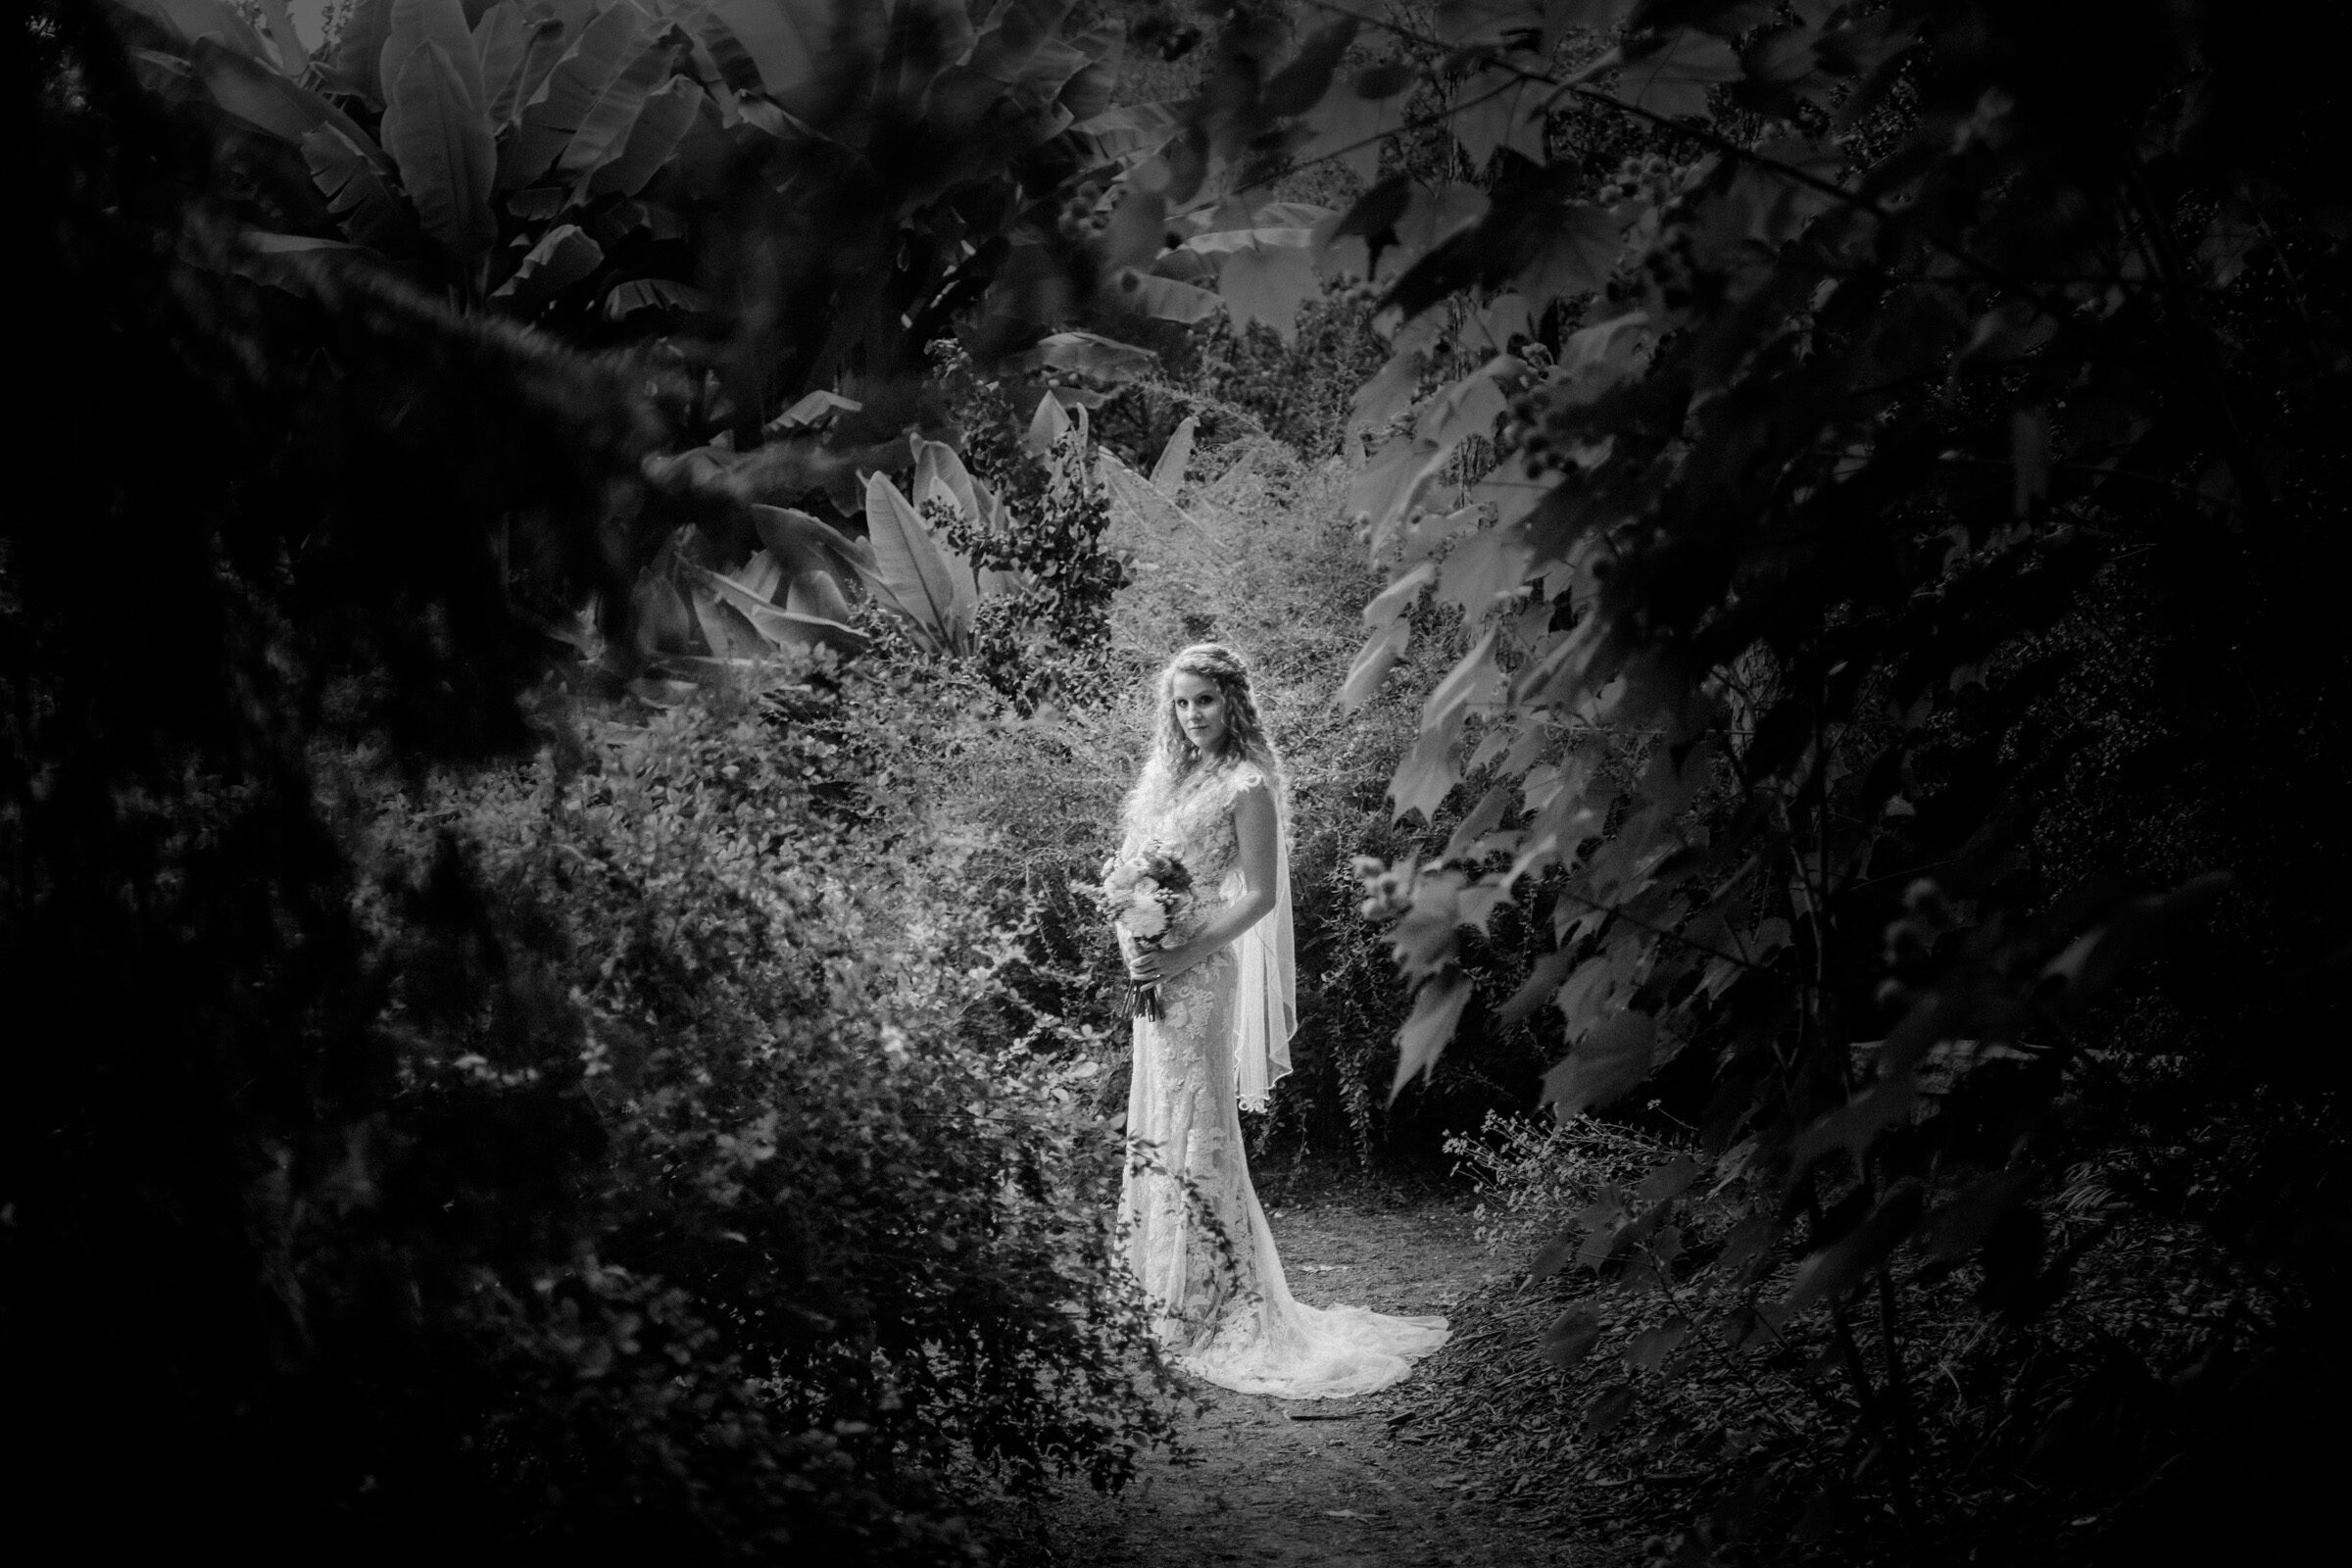 duke gardens wedding photography - hannah & johnny